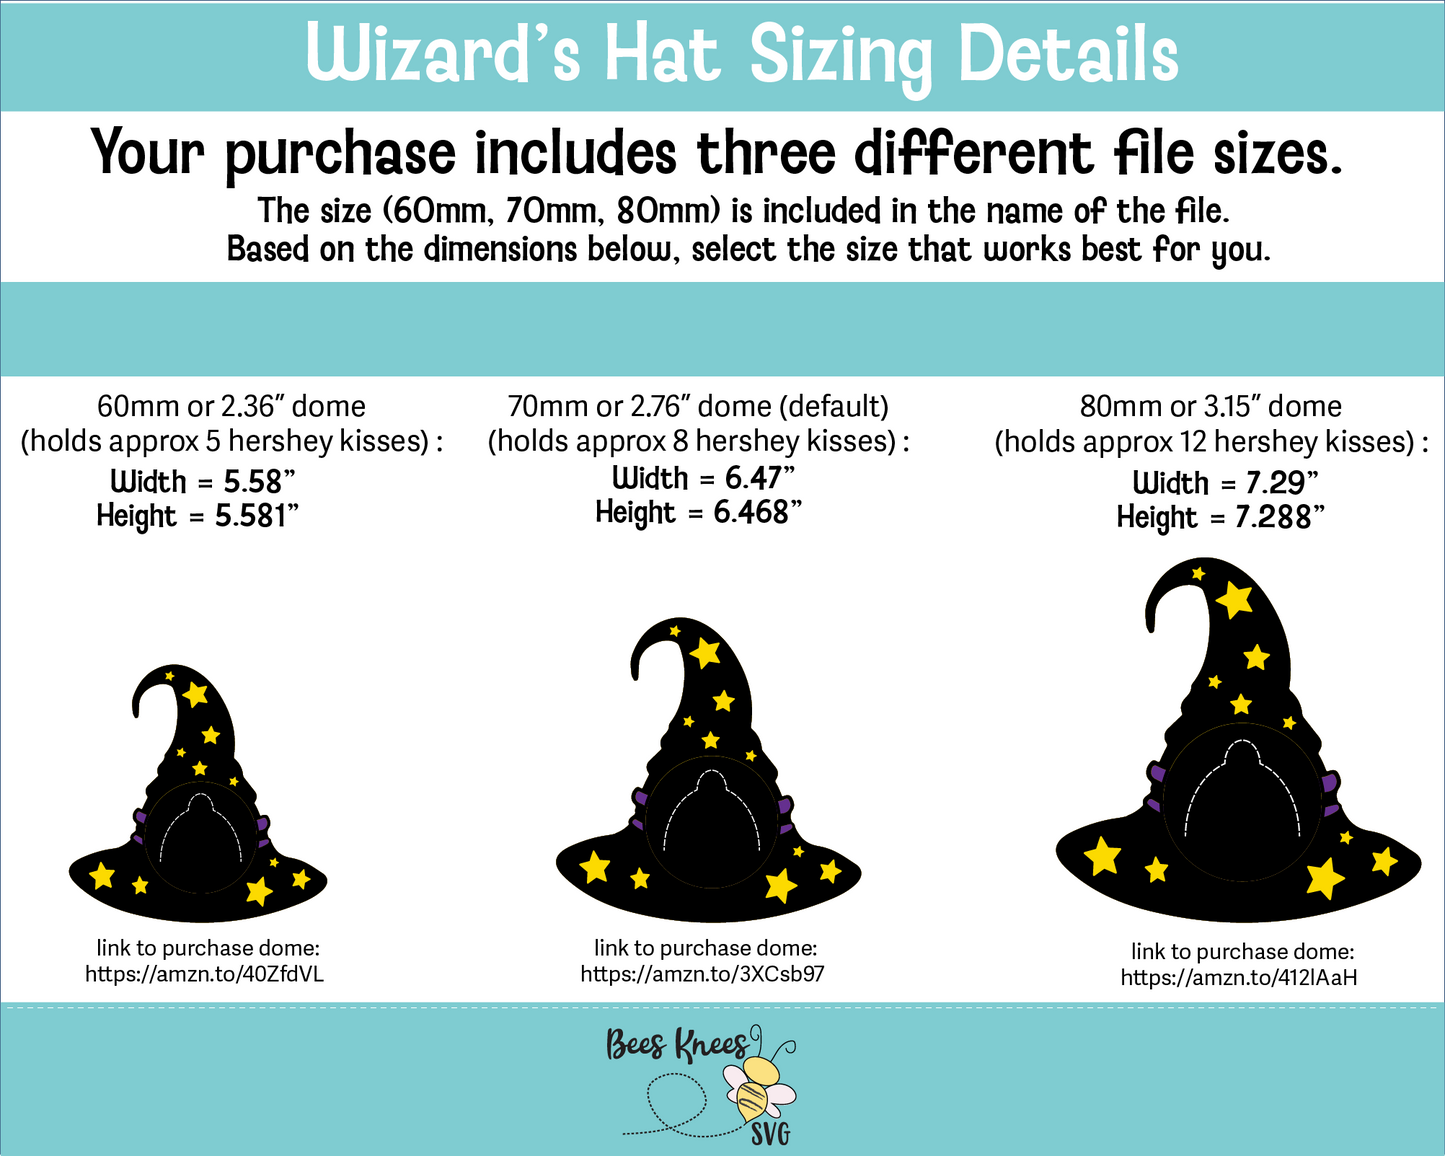 Wizard Hat Candy Holder SVG File